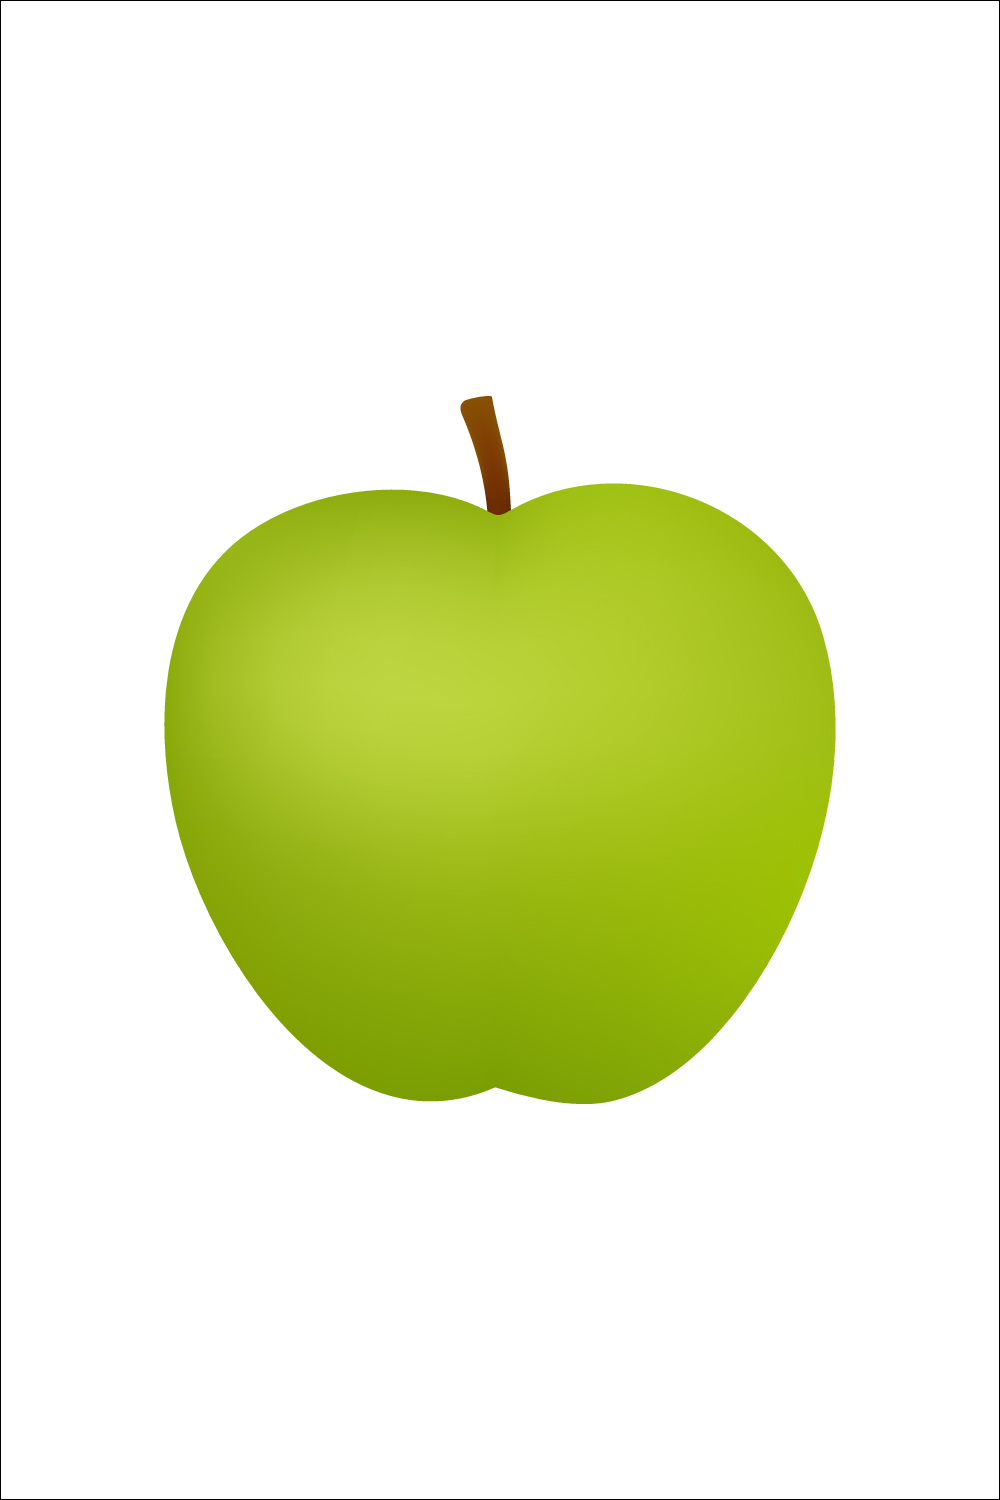 Green Apple Illustration On White Background pinterest preview image.